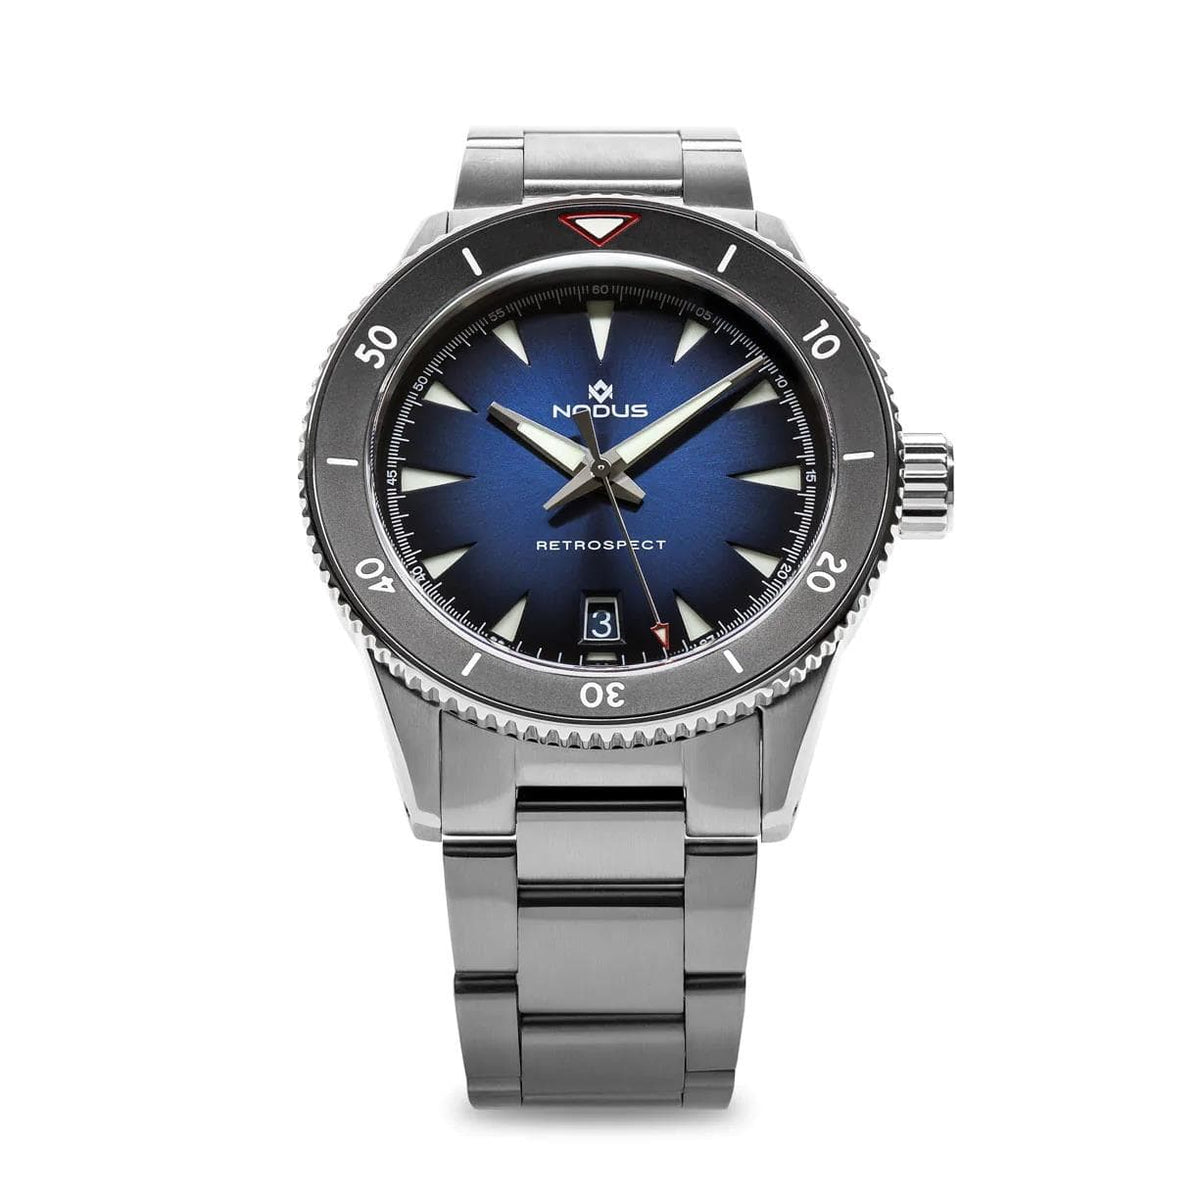 Nodus Retrospect III Automatic Dive Watch - Nebula Blue